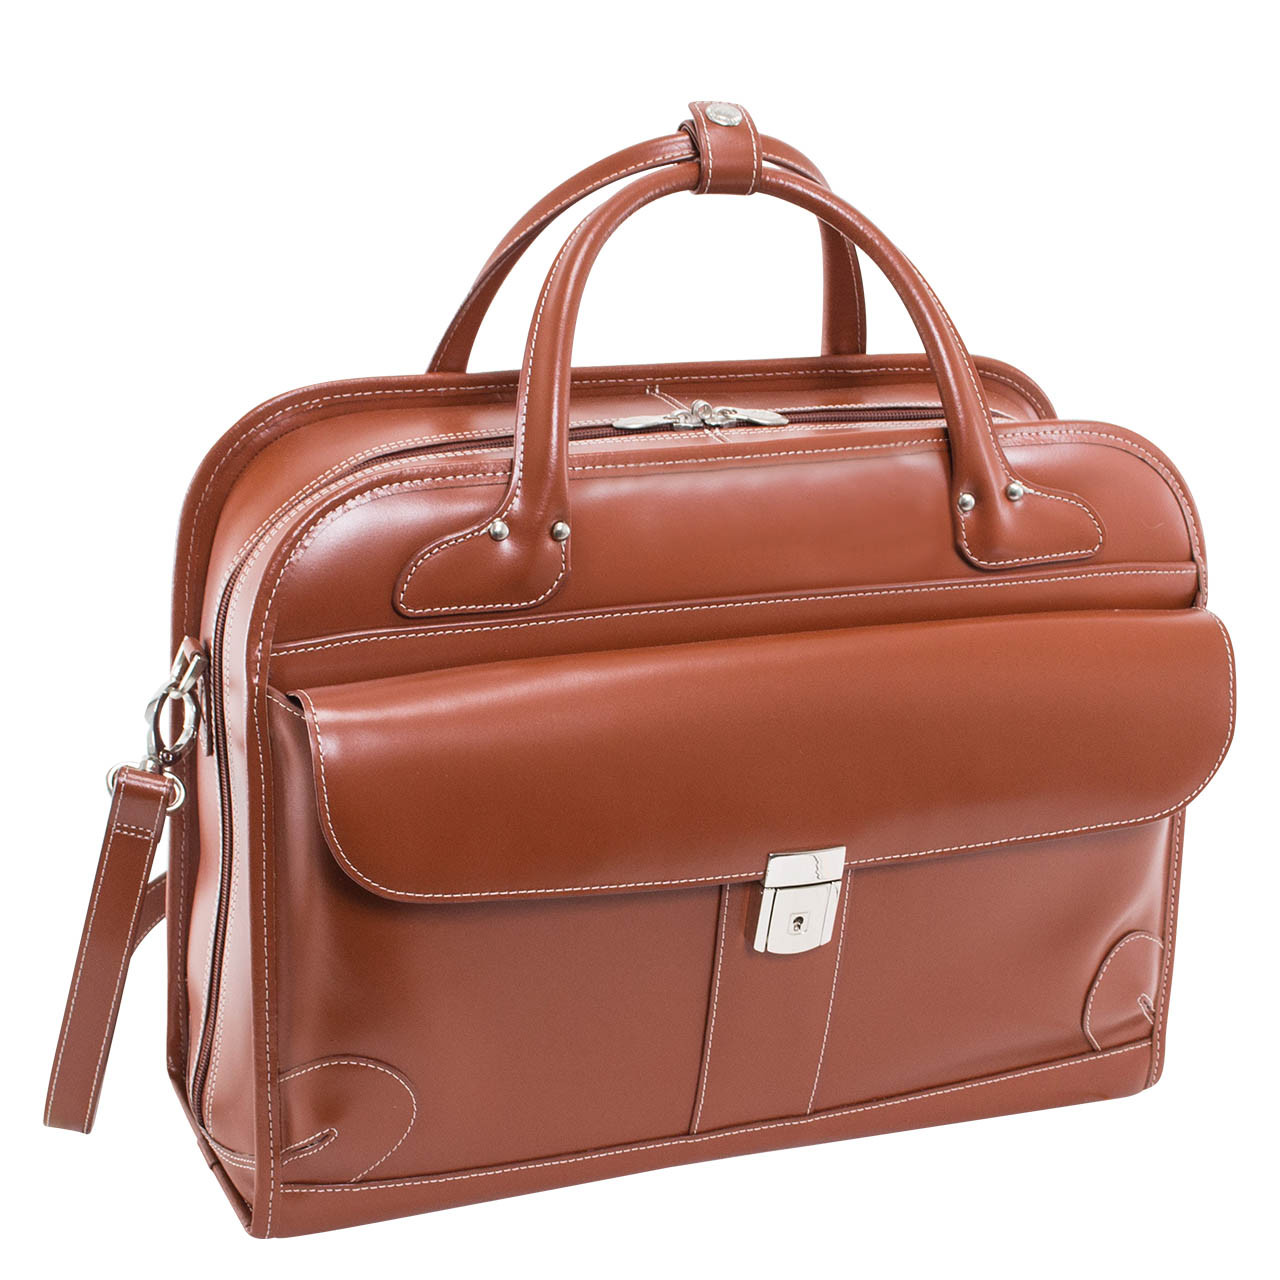 Franklin Covey Genuine Black Leather Tote Bag Briefcase Organizer Laptop  Purse